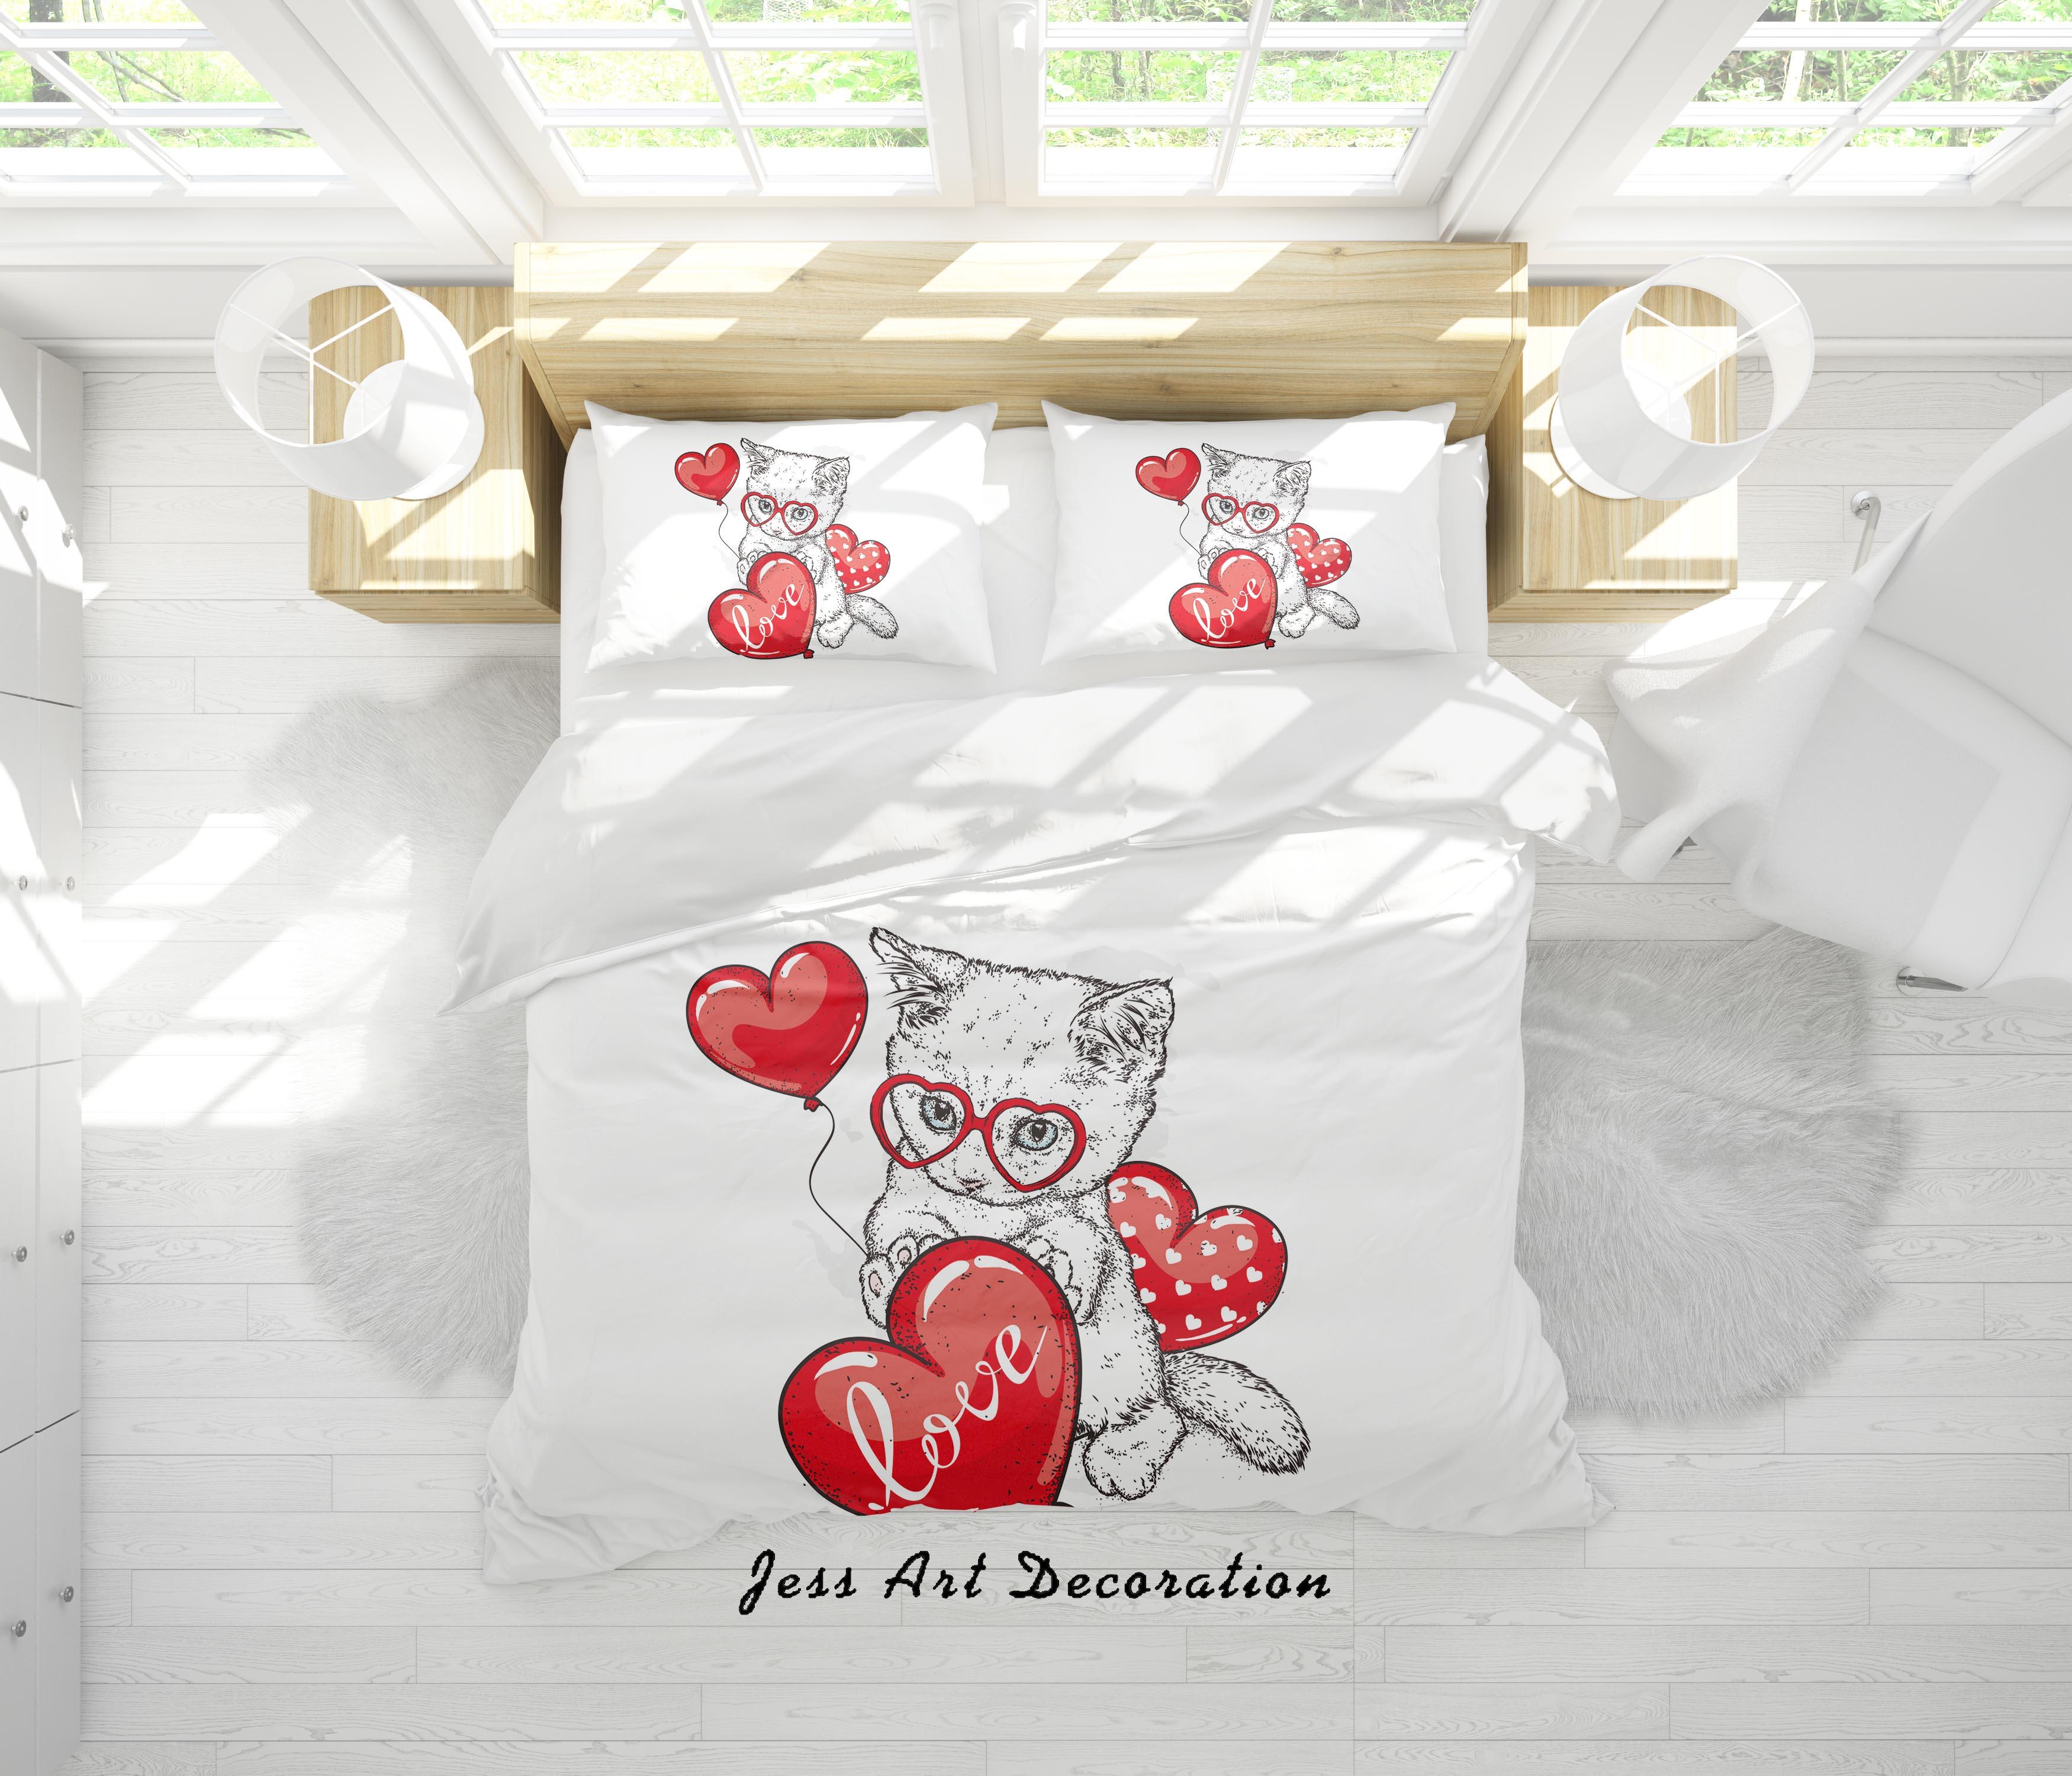 3D White Cat Balloon Quilt Cover Set Bedding Set Duvet Cover Pillowcases SF161- Jess Art Decoration